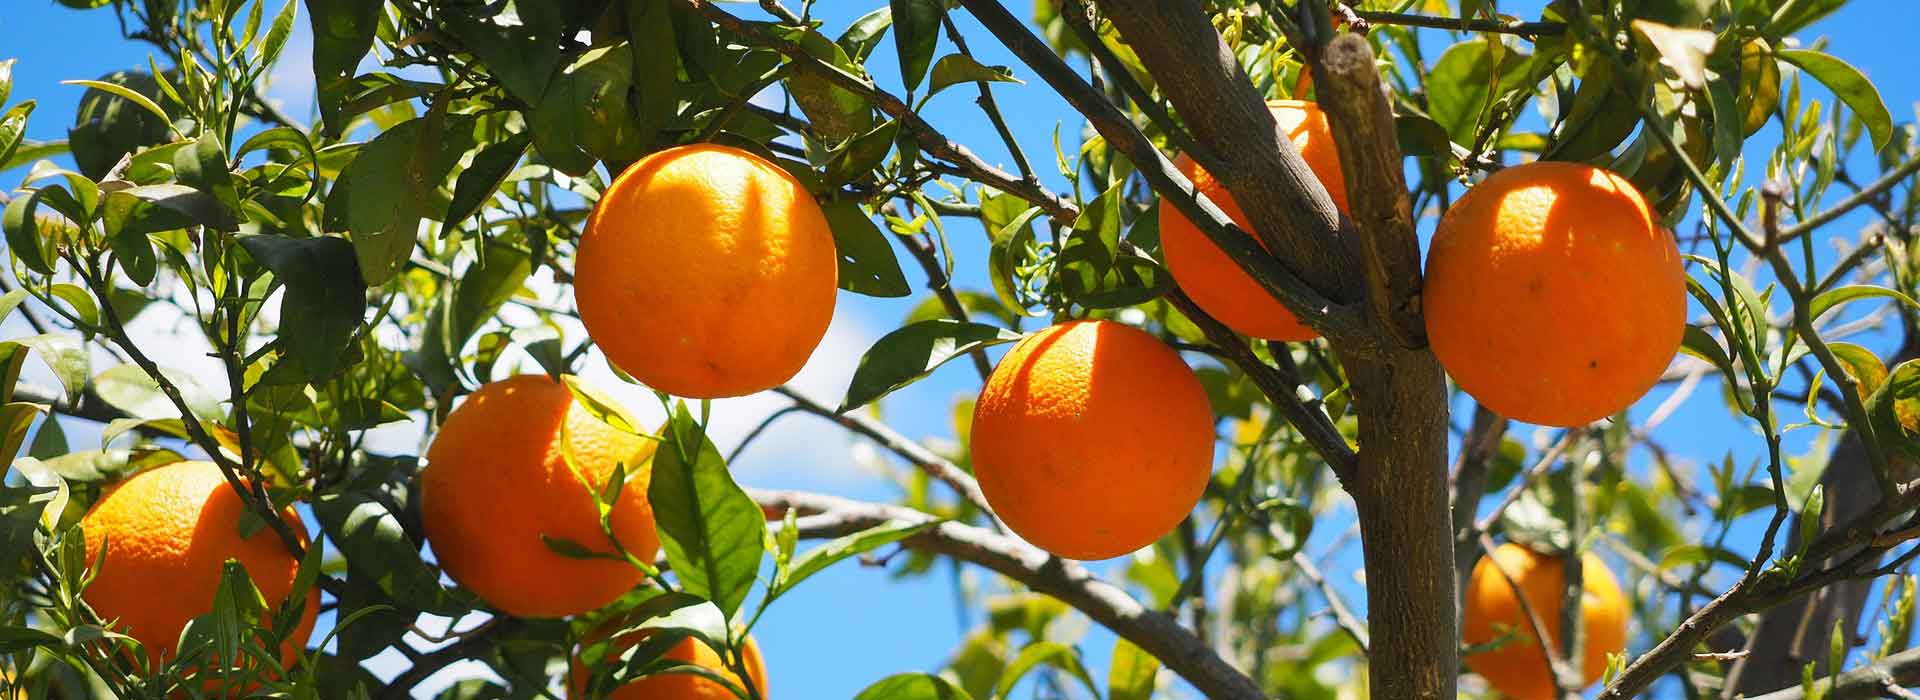 Orange plantation investment opportunity